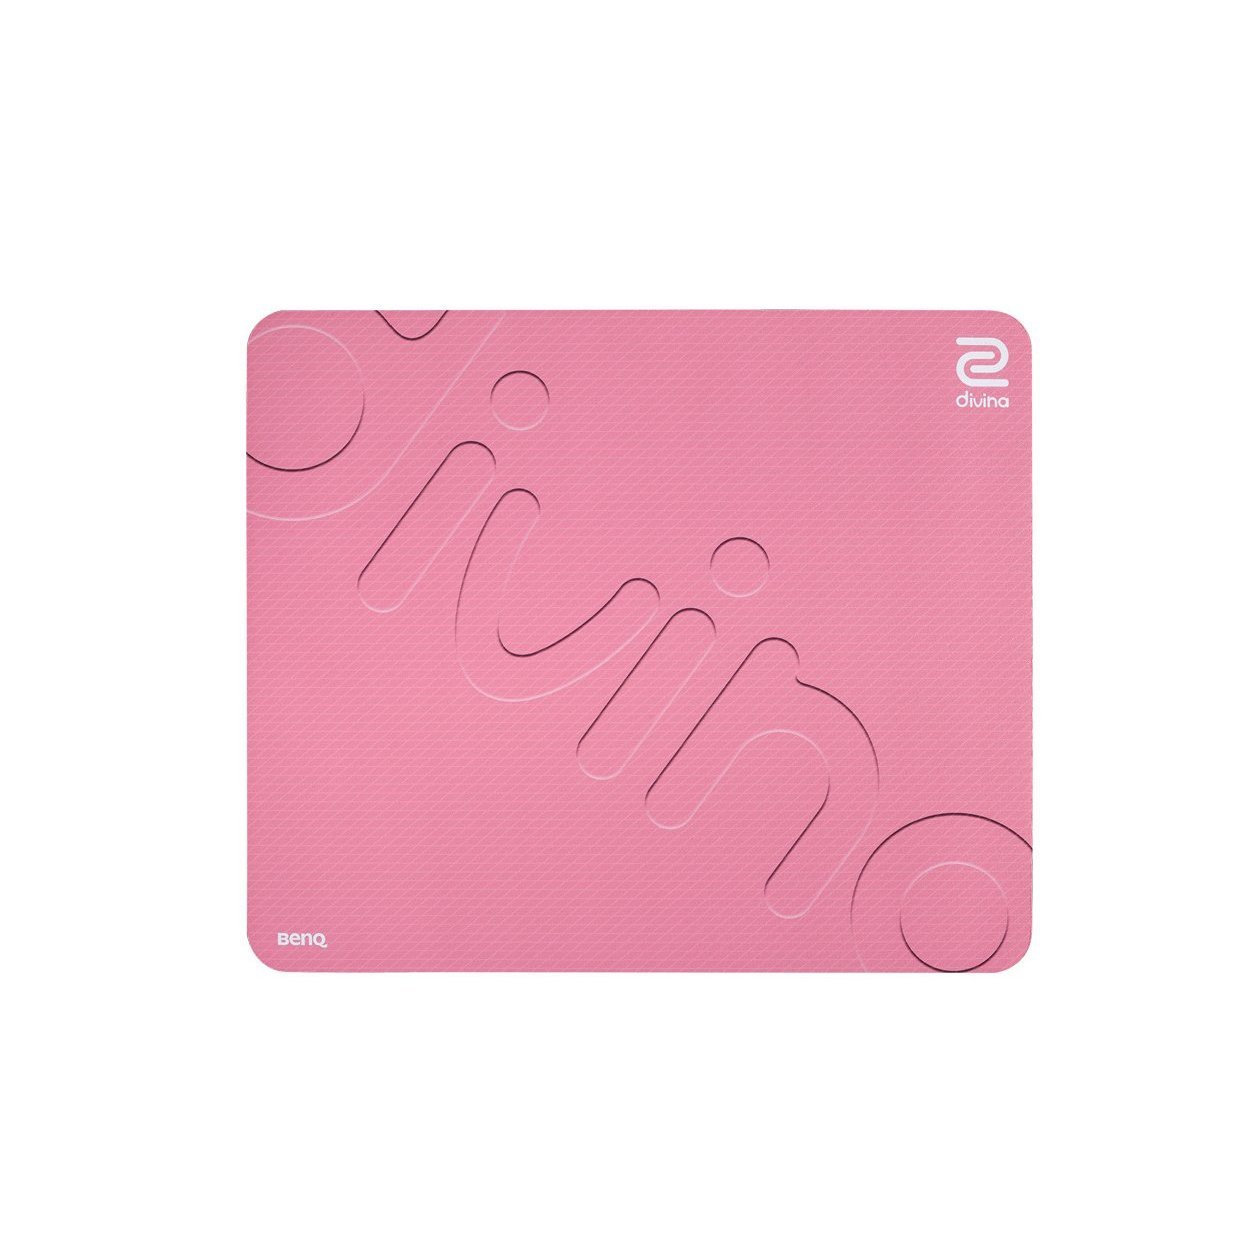 ZOWIE G-SR SE DIVINA PINK Mouse Pad-Addice Inc